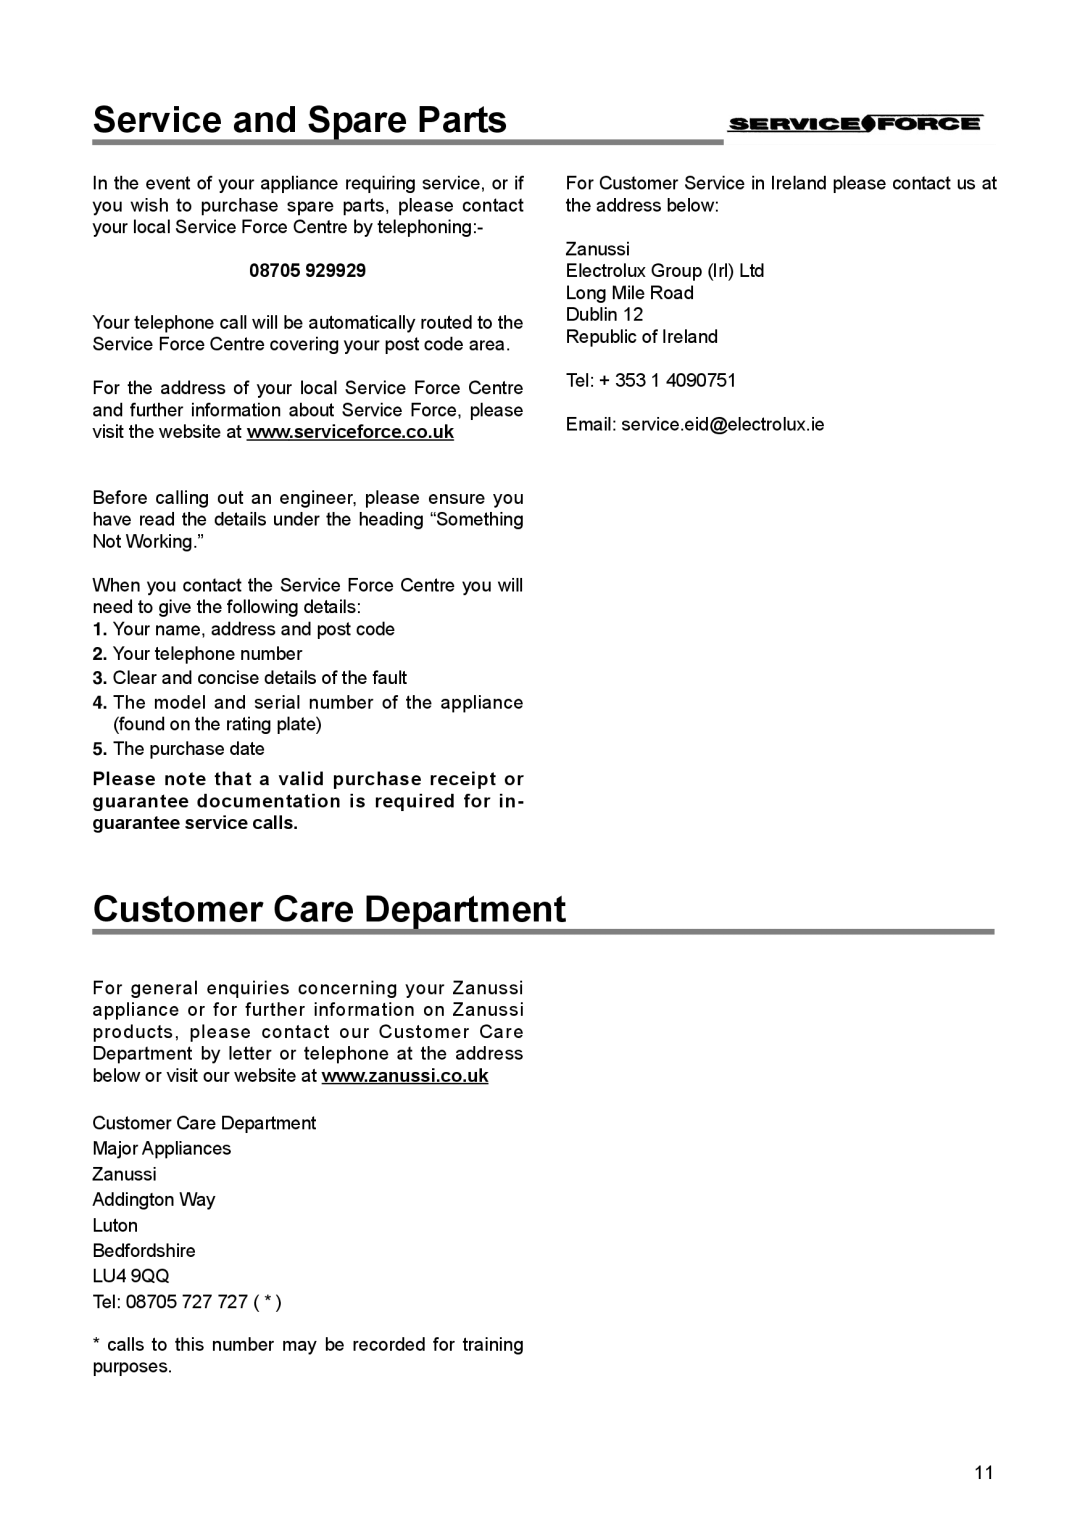 Zanussi ZI 9121 FA manual Service and Spare Parts, Customer Care Department, 08705 